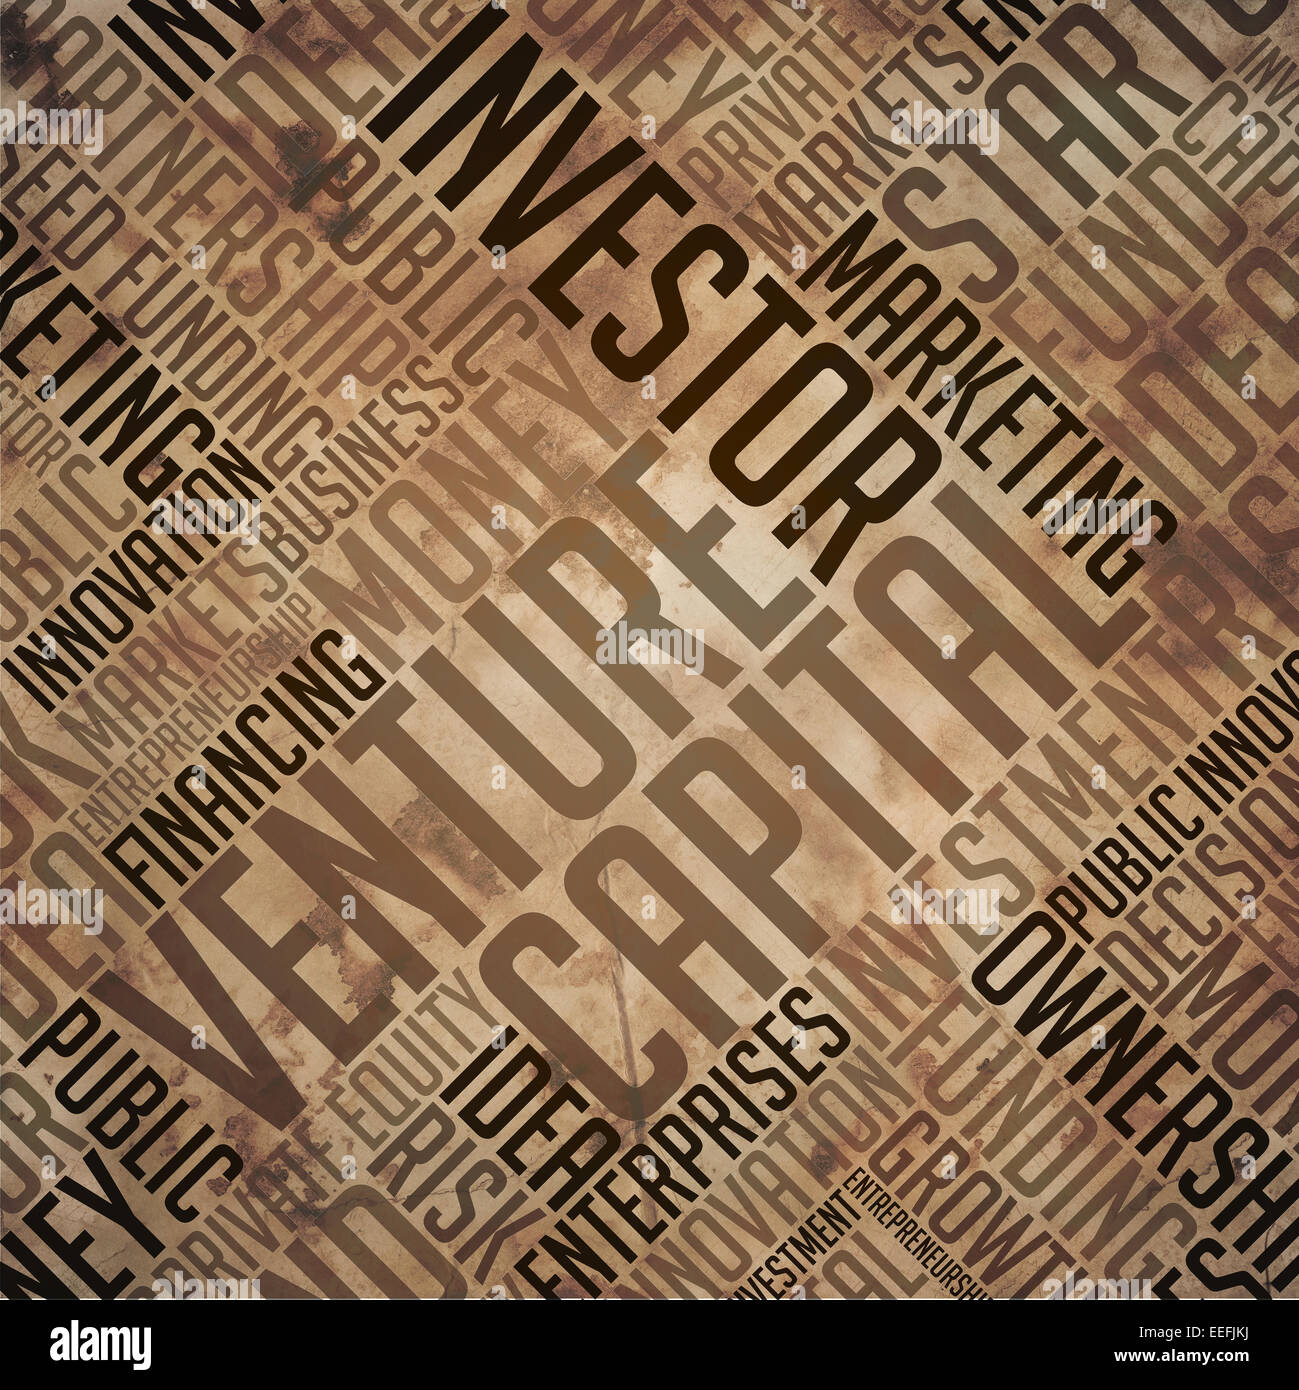 Venture Capital - Grunge-braun Wort-Collage. Stockfoto